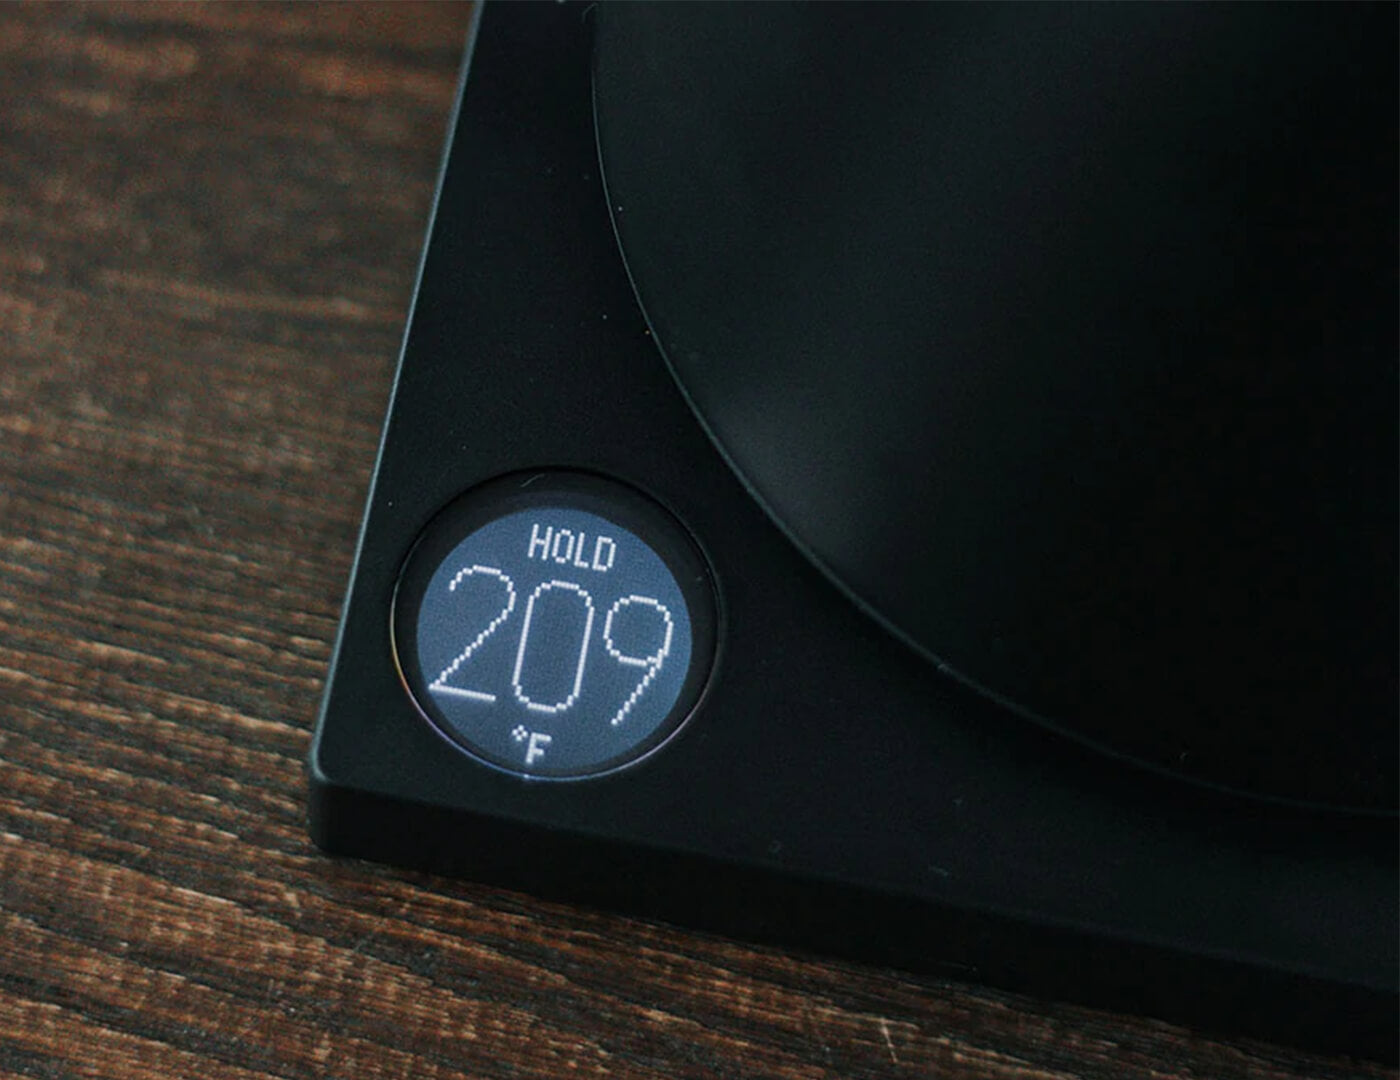 Digital temperature readout on kettle base